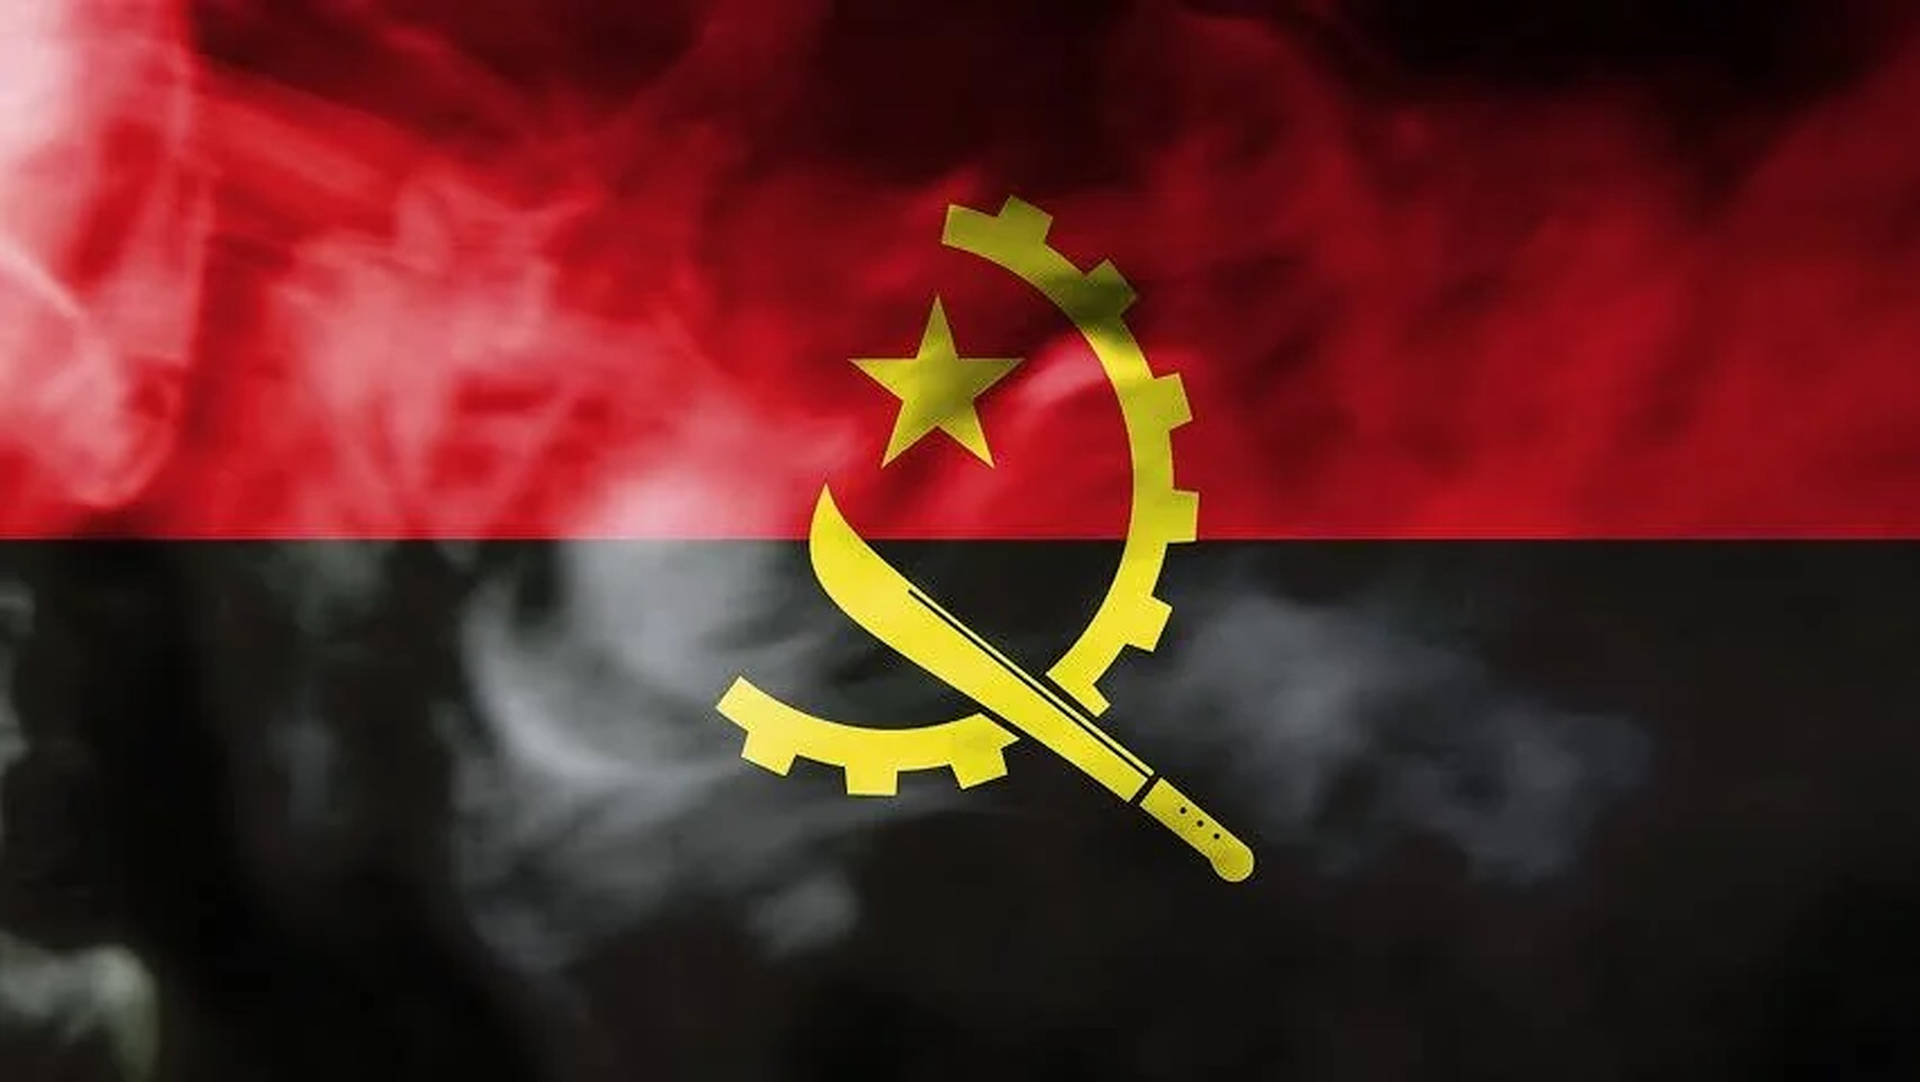 Angolanischeflagge Im Rauch Wallpaper